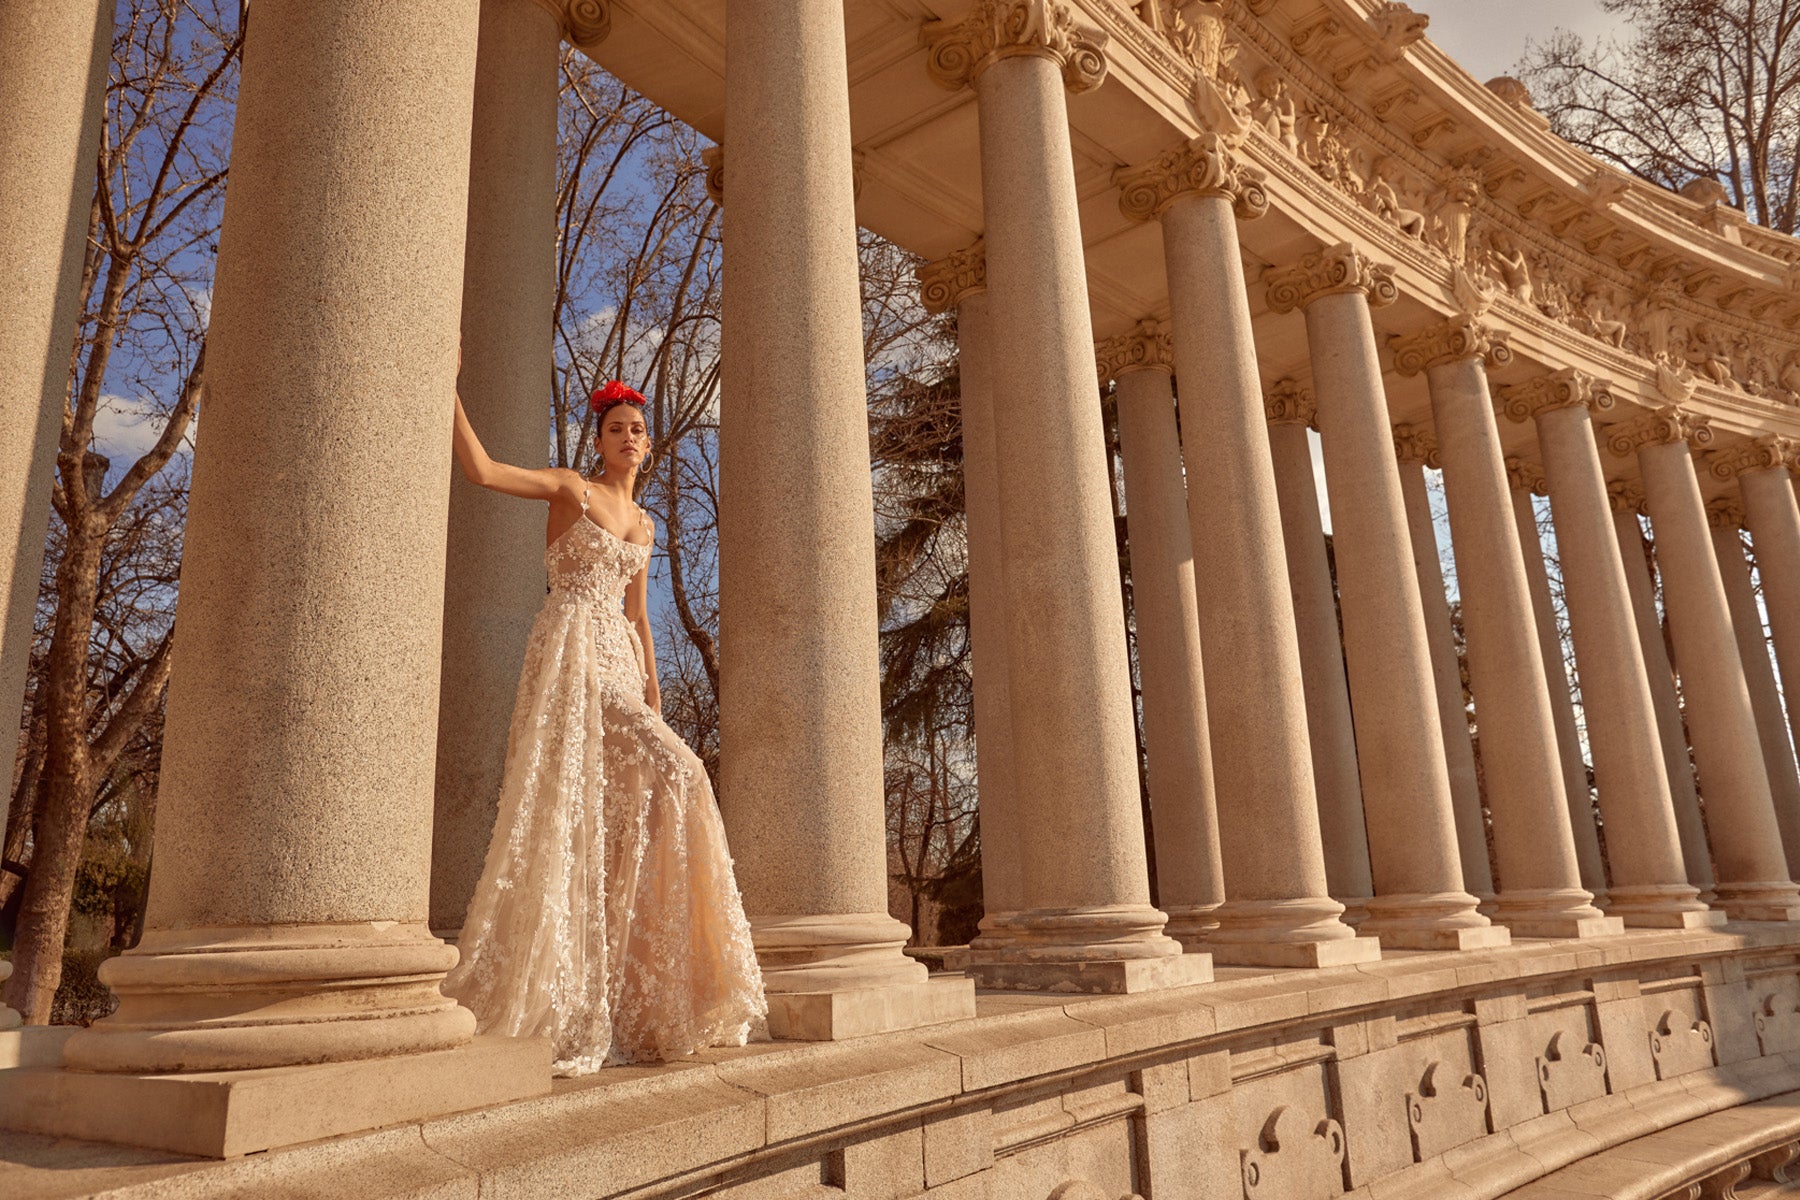 eternal-bridal-galia-lahav-couture-wedding-dress-catalina